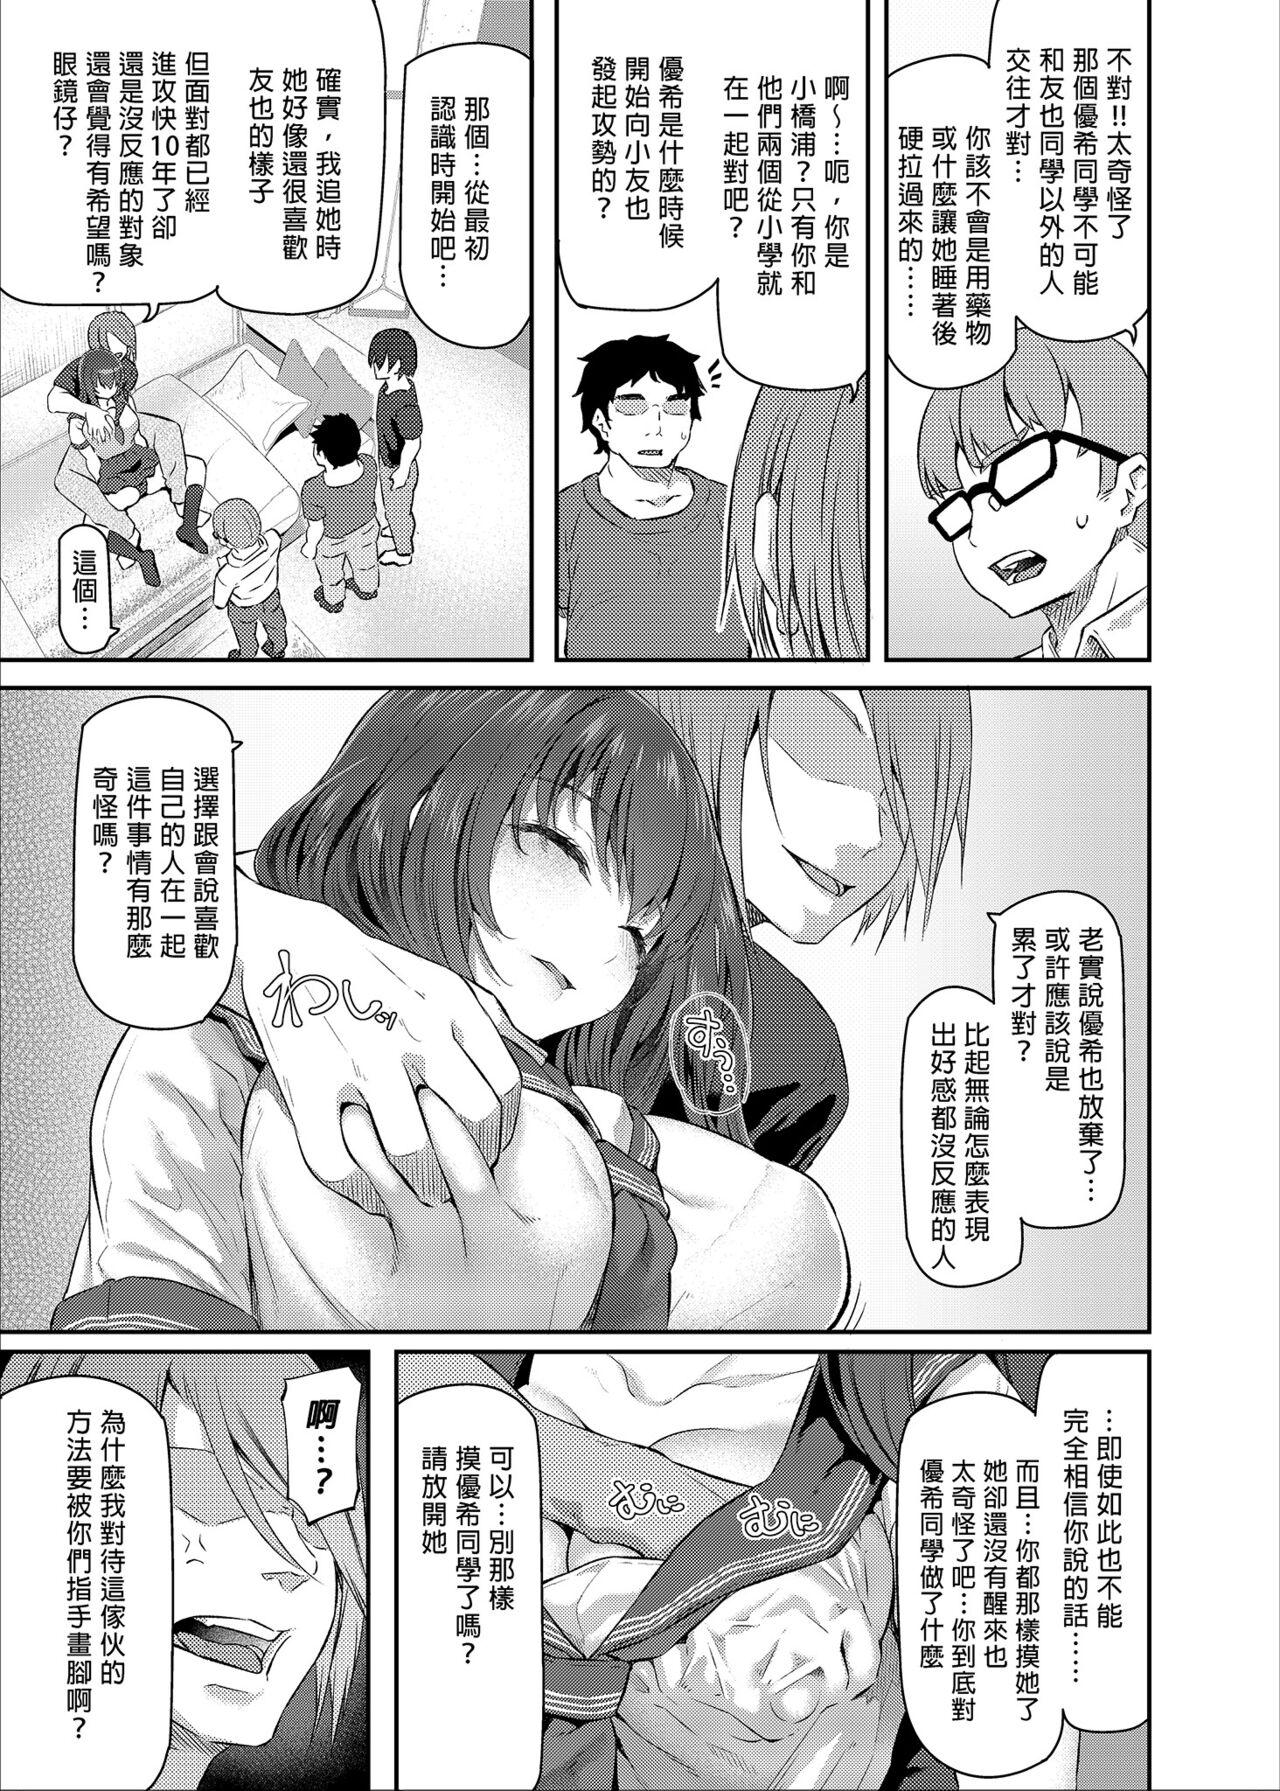 Rubbing Suika San - Original Seduction - Page 5